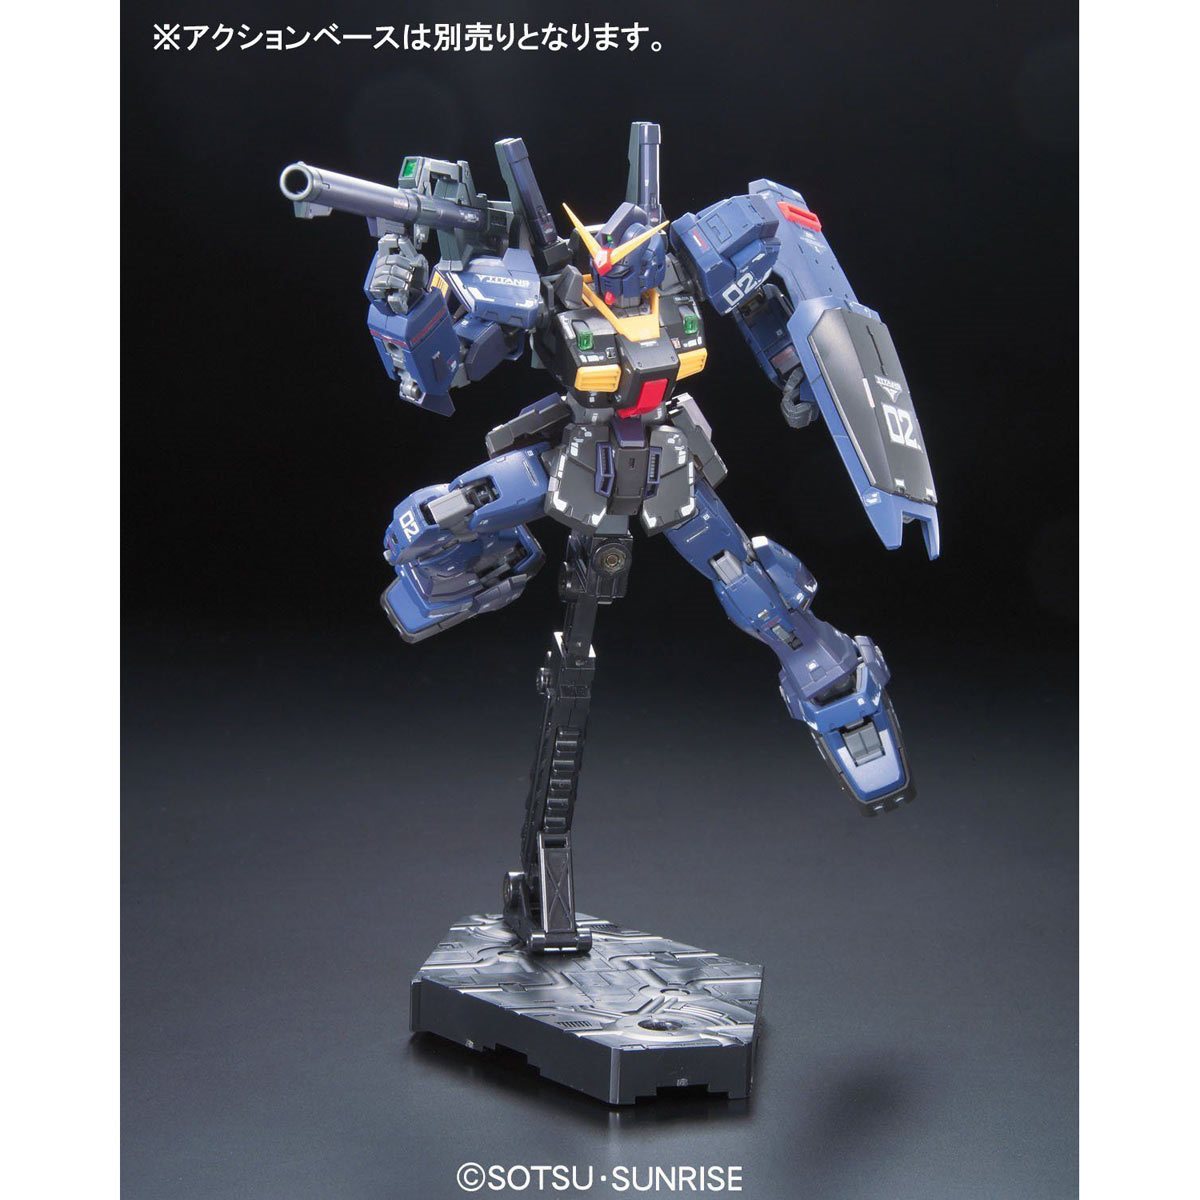 Bandai Hobby Gunpla Real Grade Model Kit: Mobile Suit Zeta Gundam - RX 178 MK-II Titans Escala 1/144